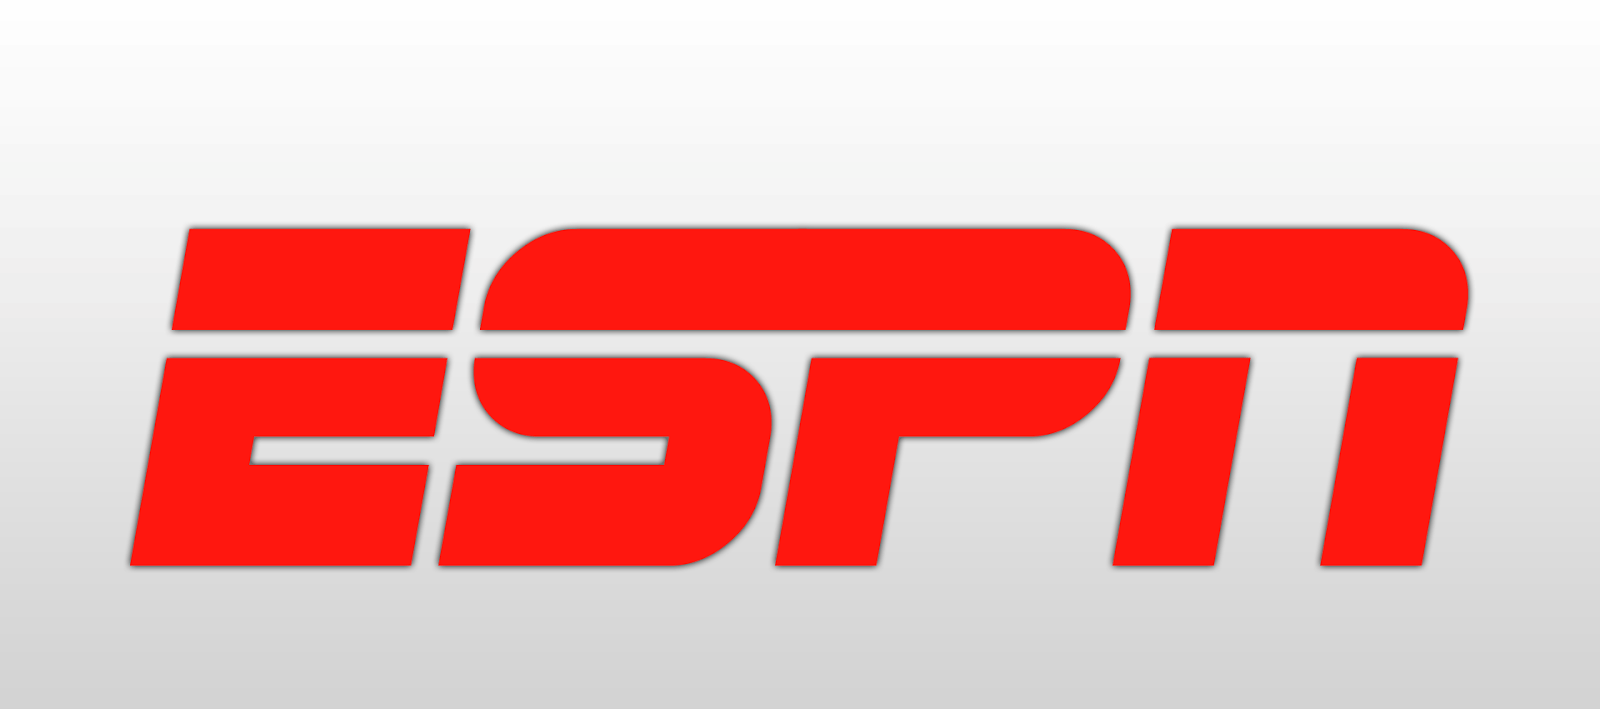 New ESPN Logo - File:ESPN logos.png - Wikimedia Commons